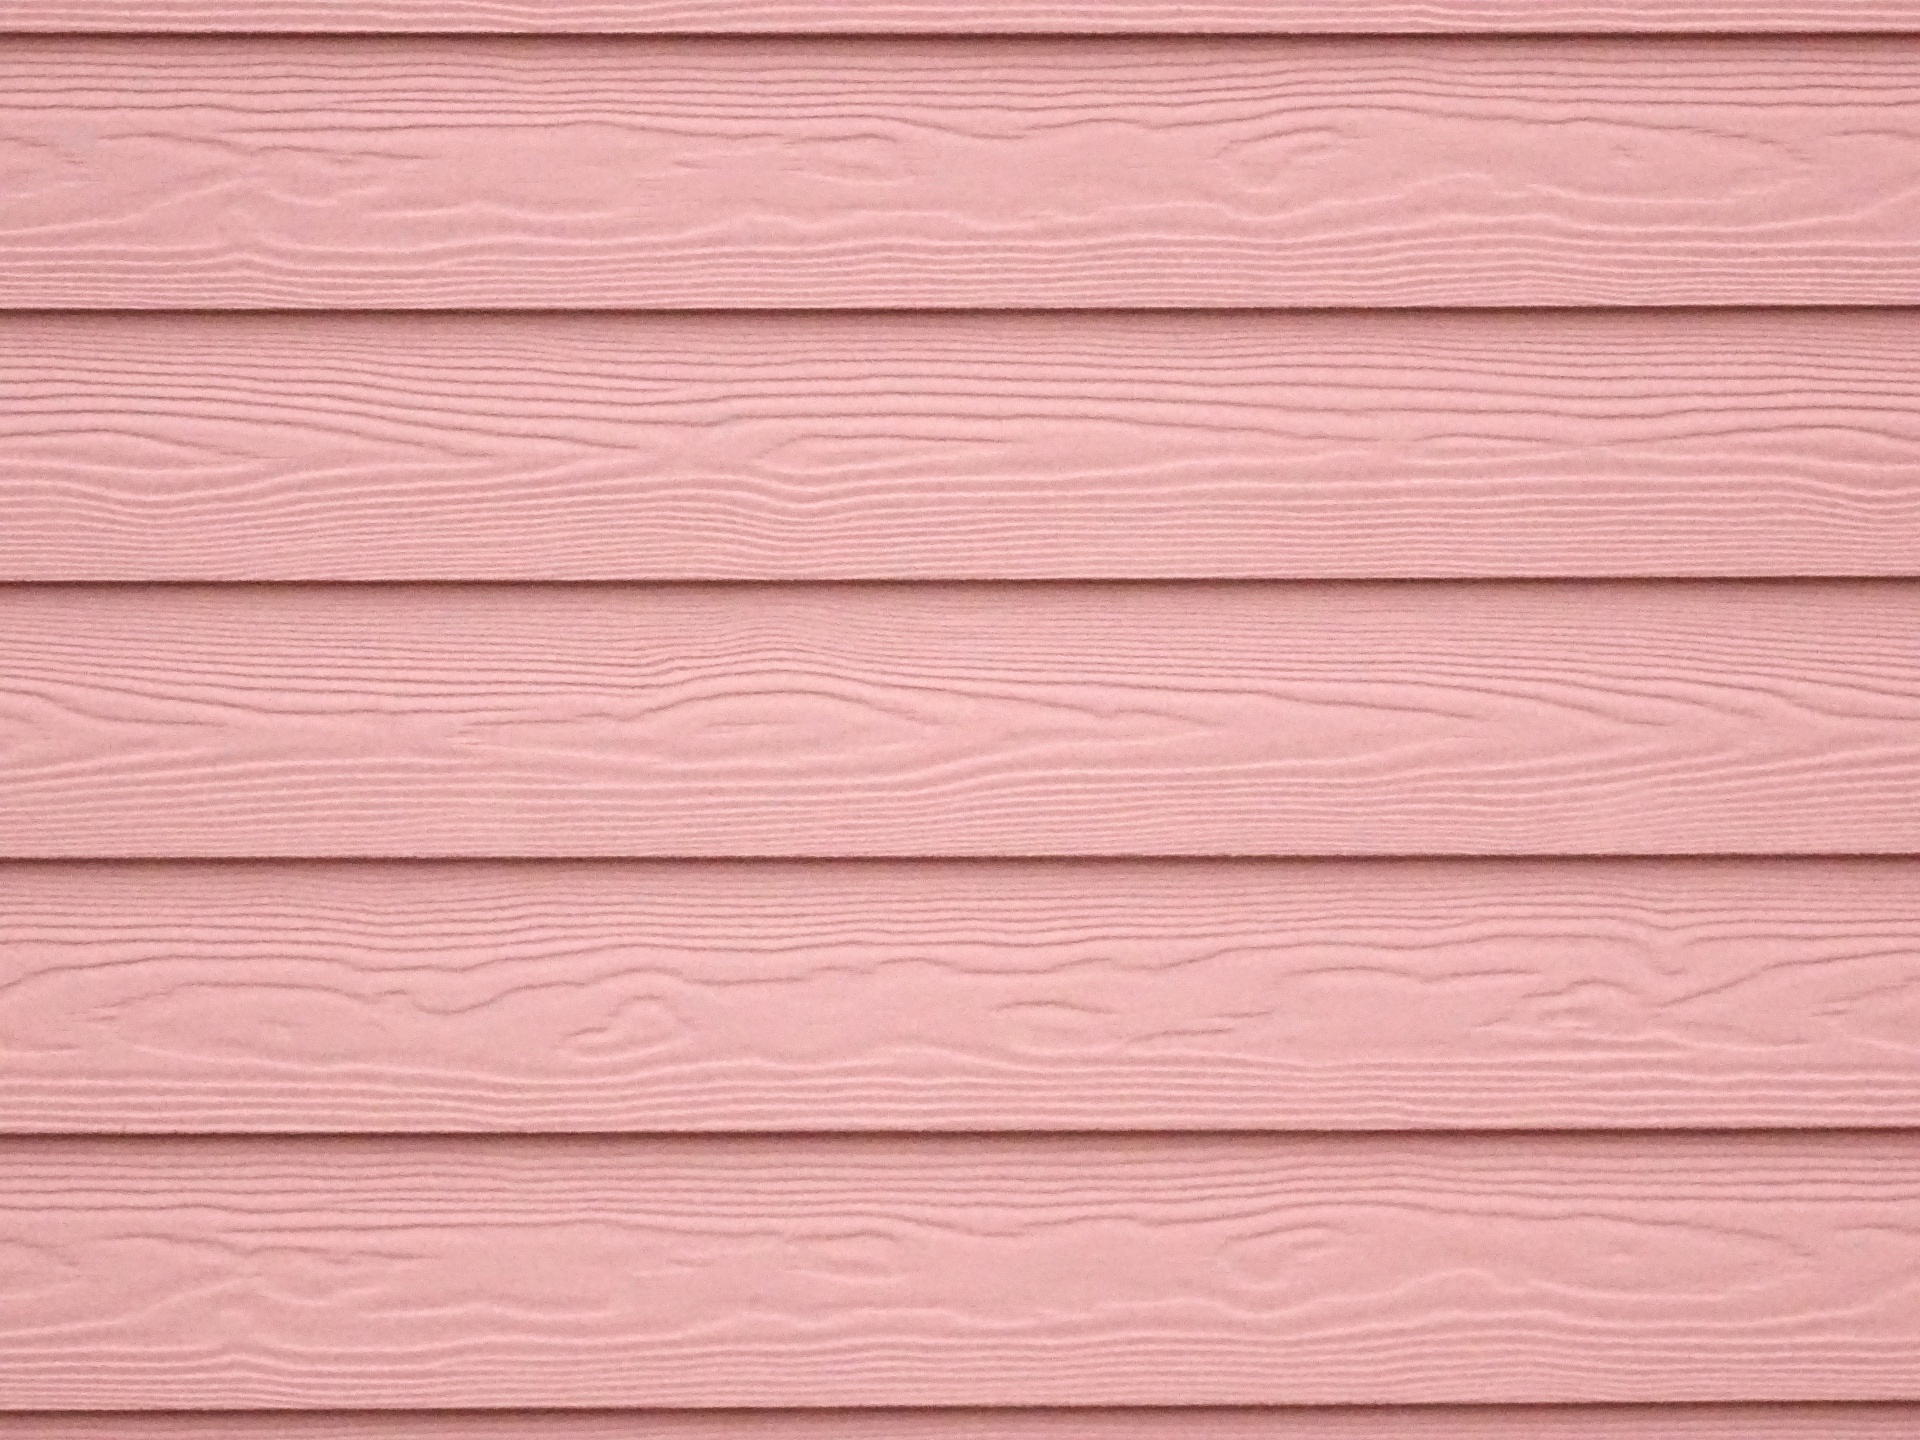 Peach Wood Texture Wallpaper